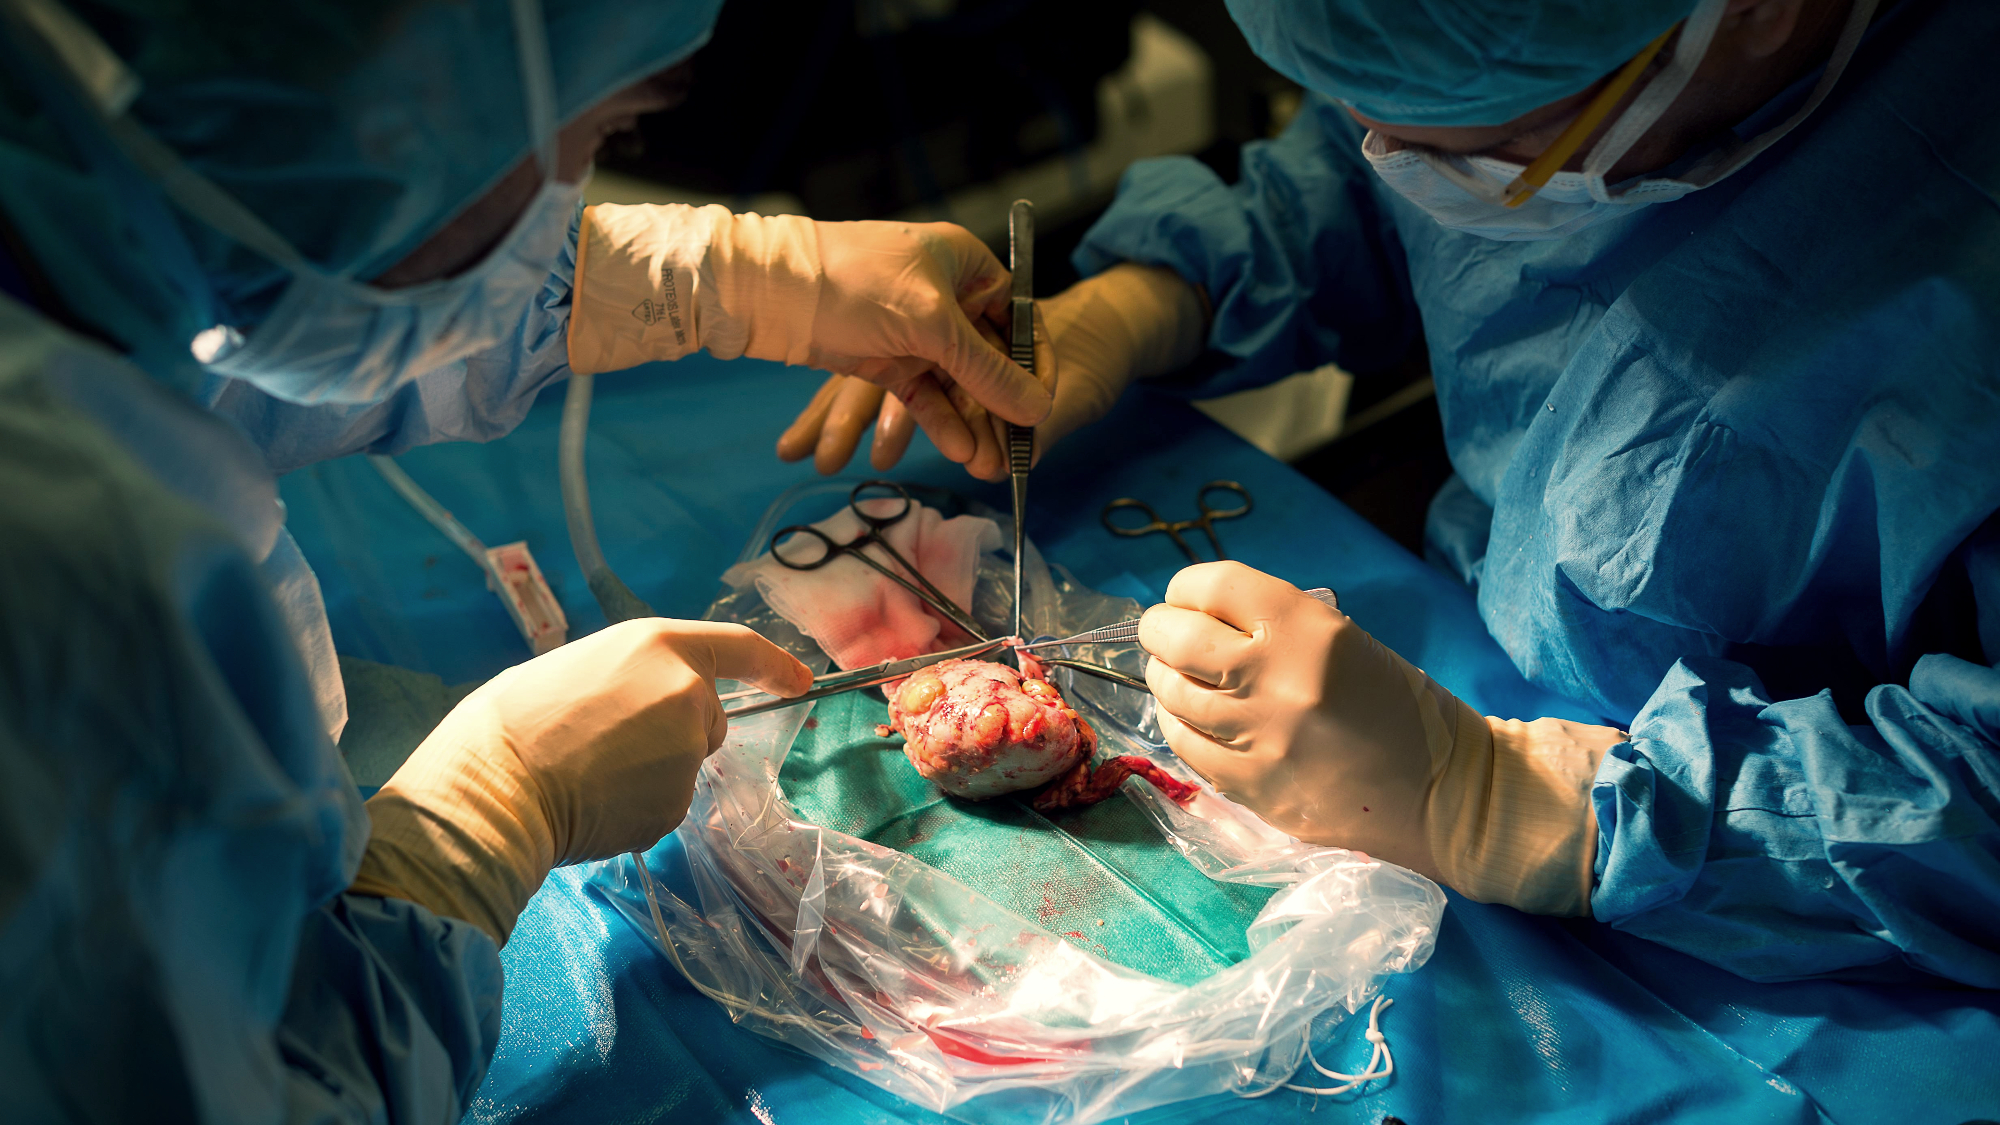  Pig kidney transplant recipient dies 